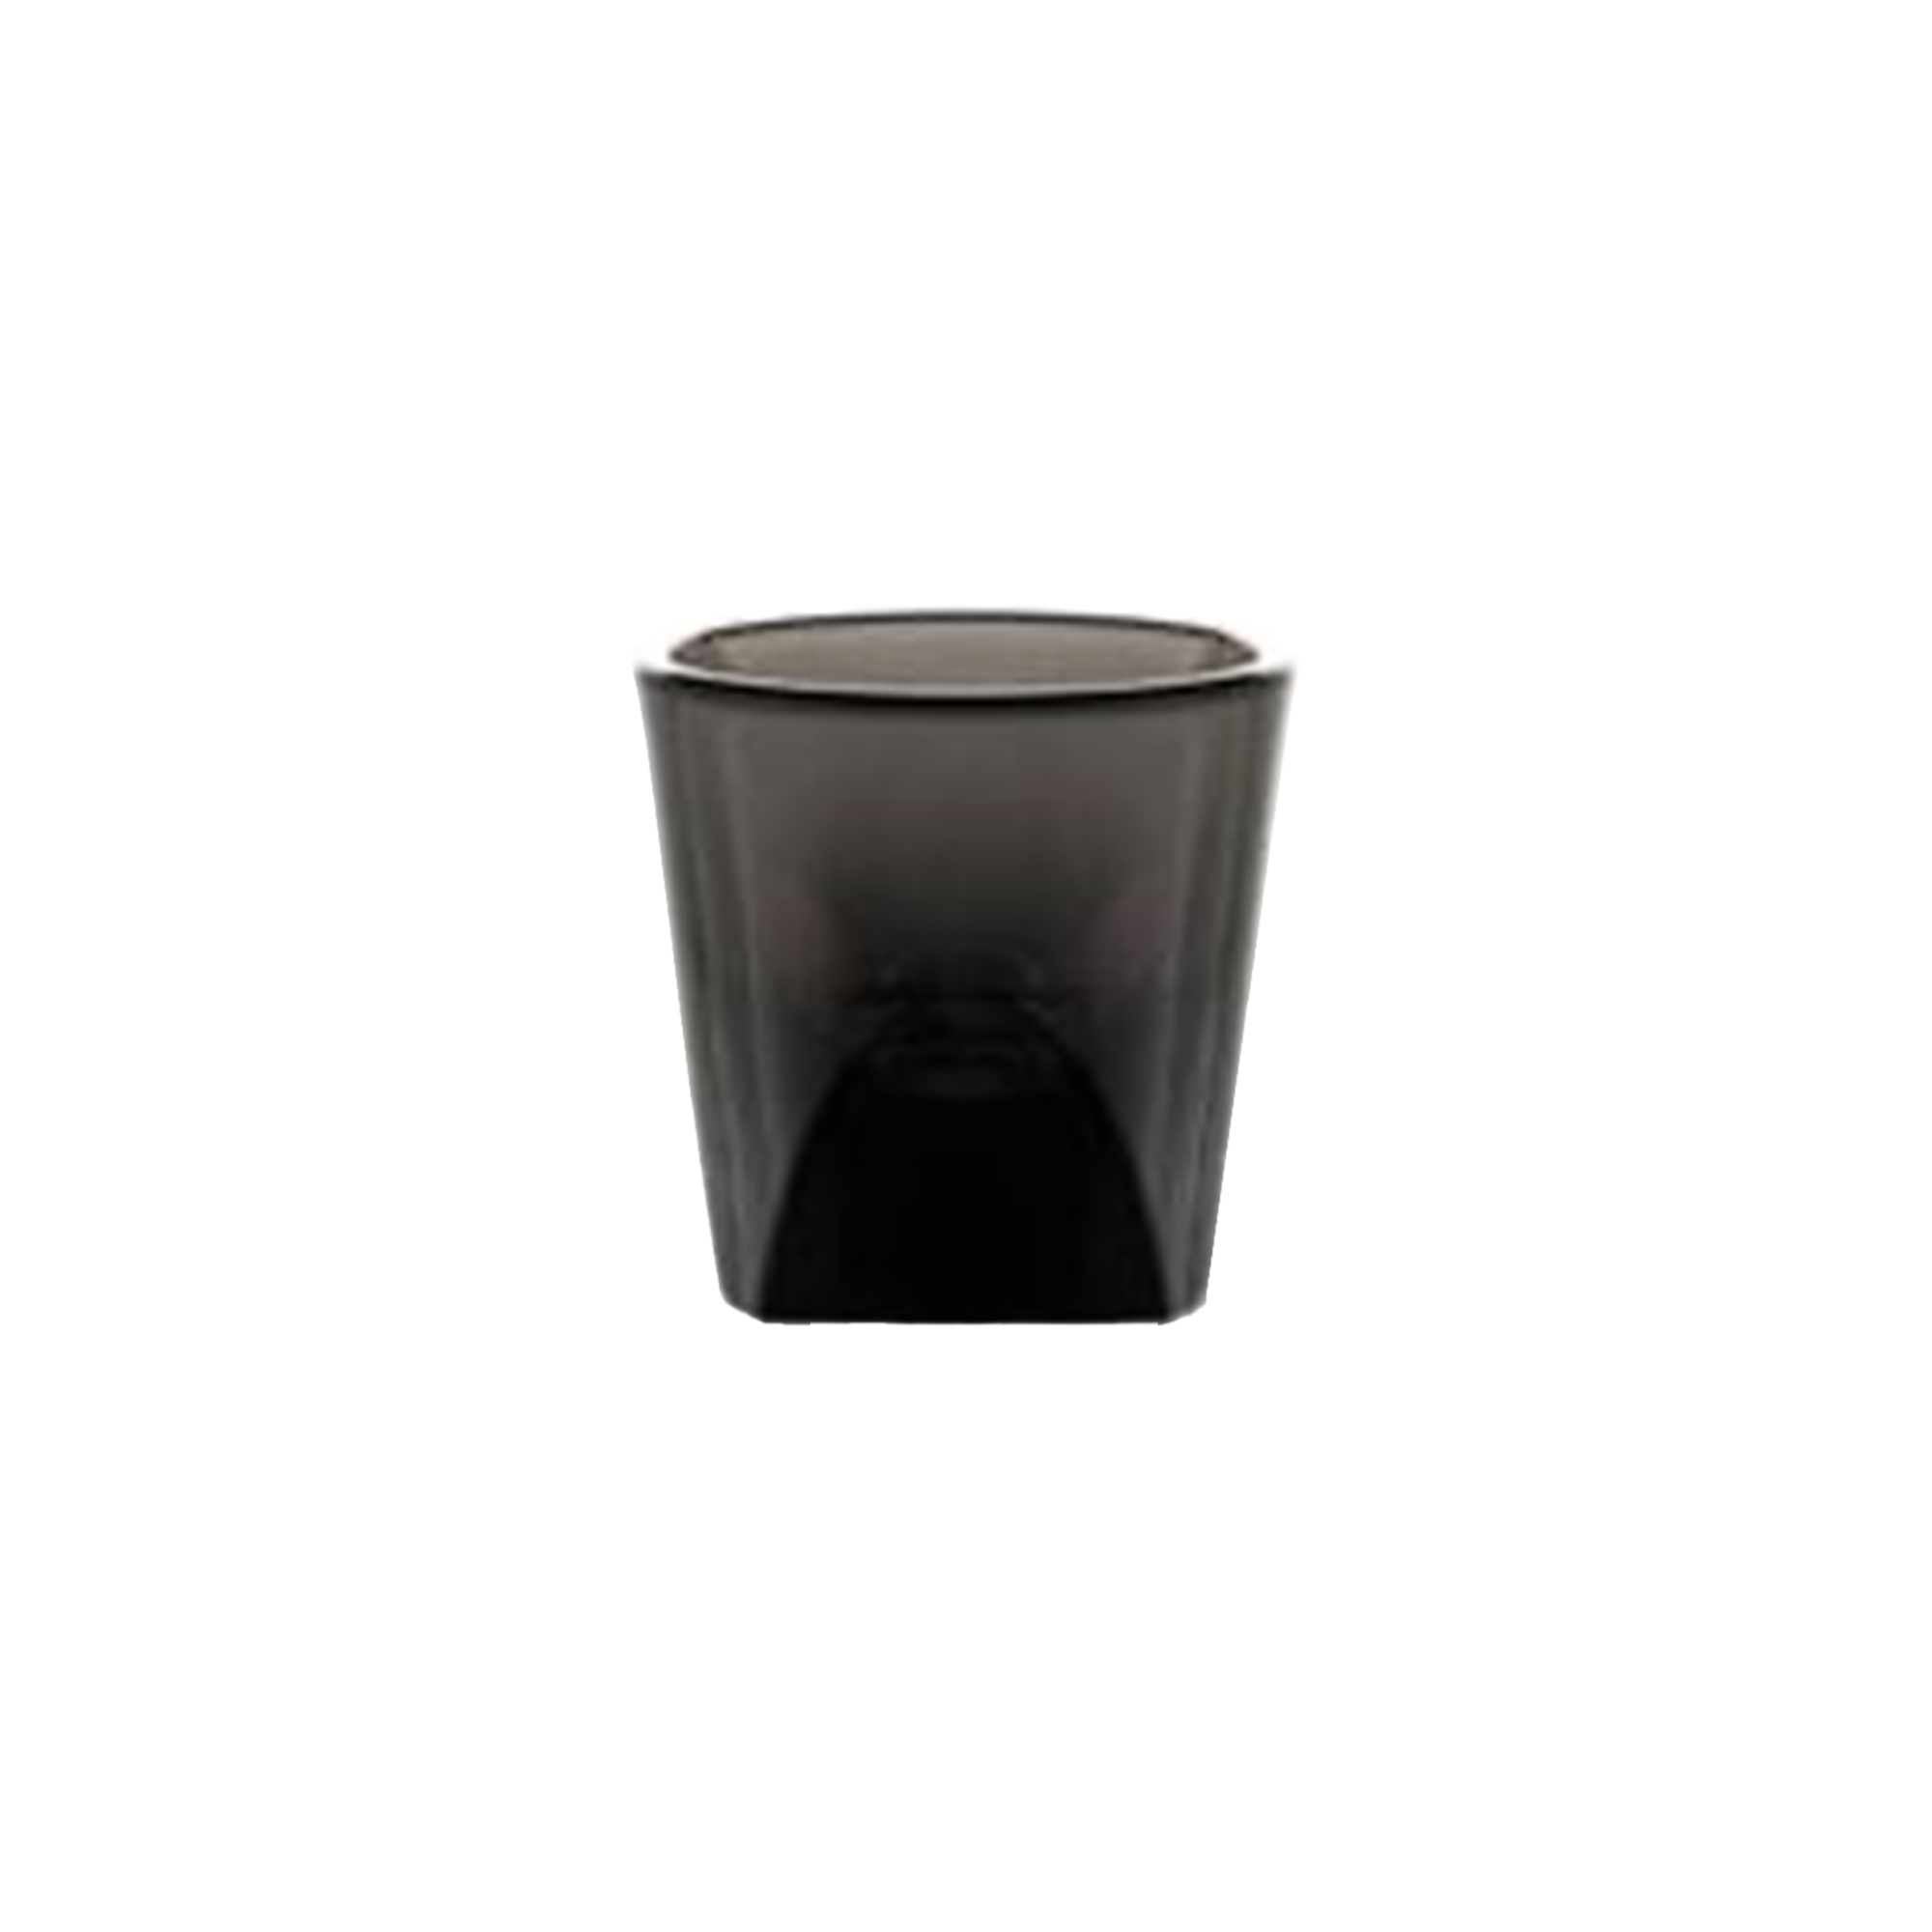 Vero Espresso Glass 3oz - Black